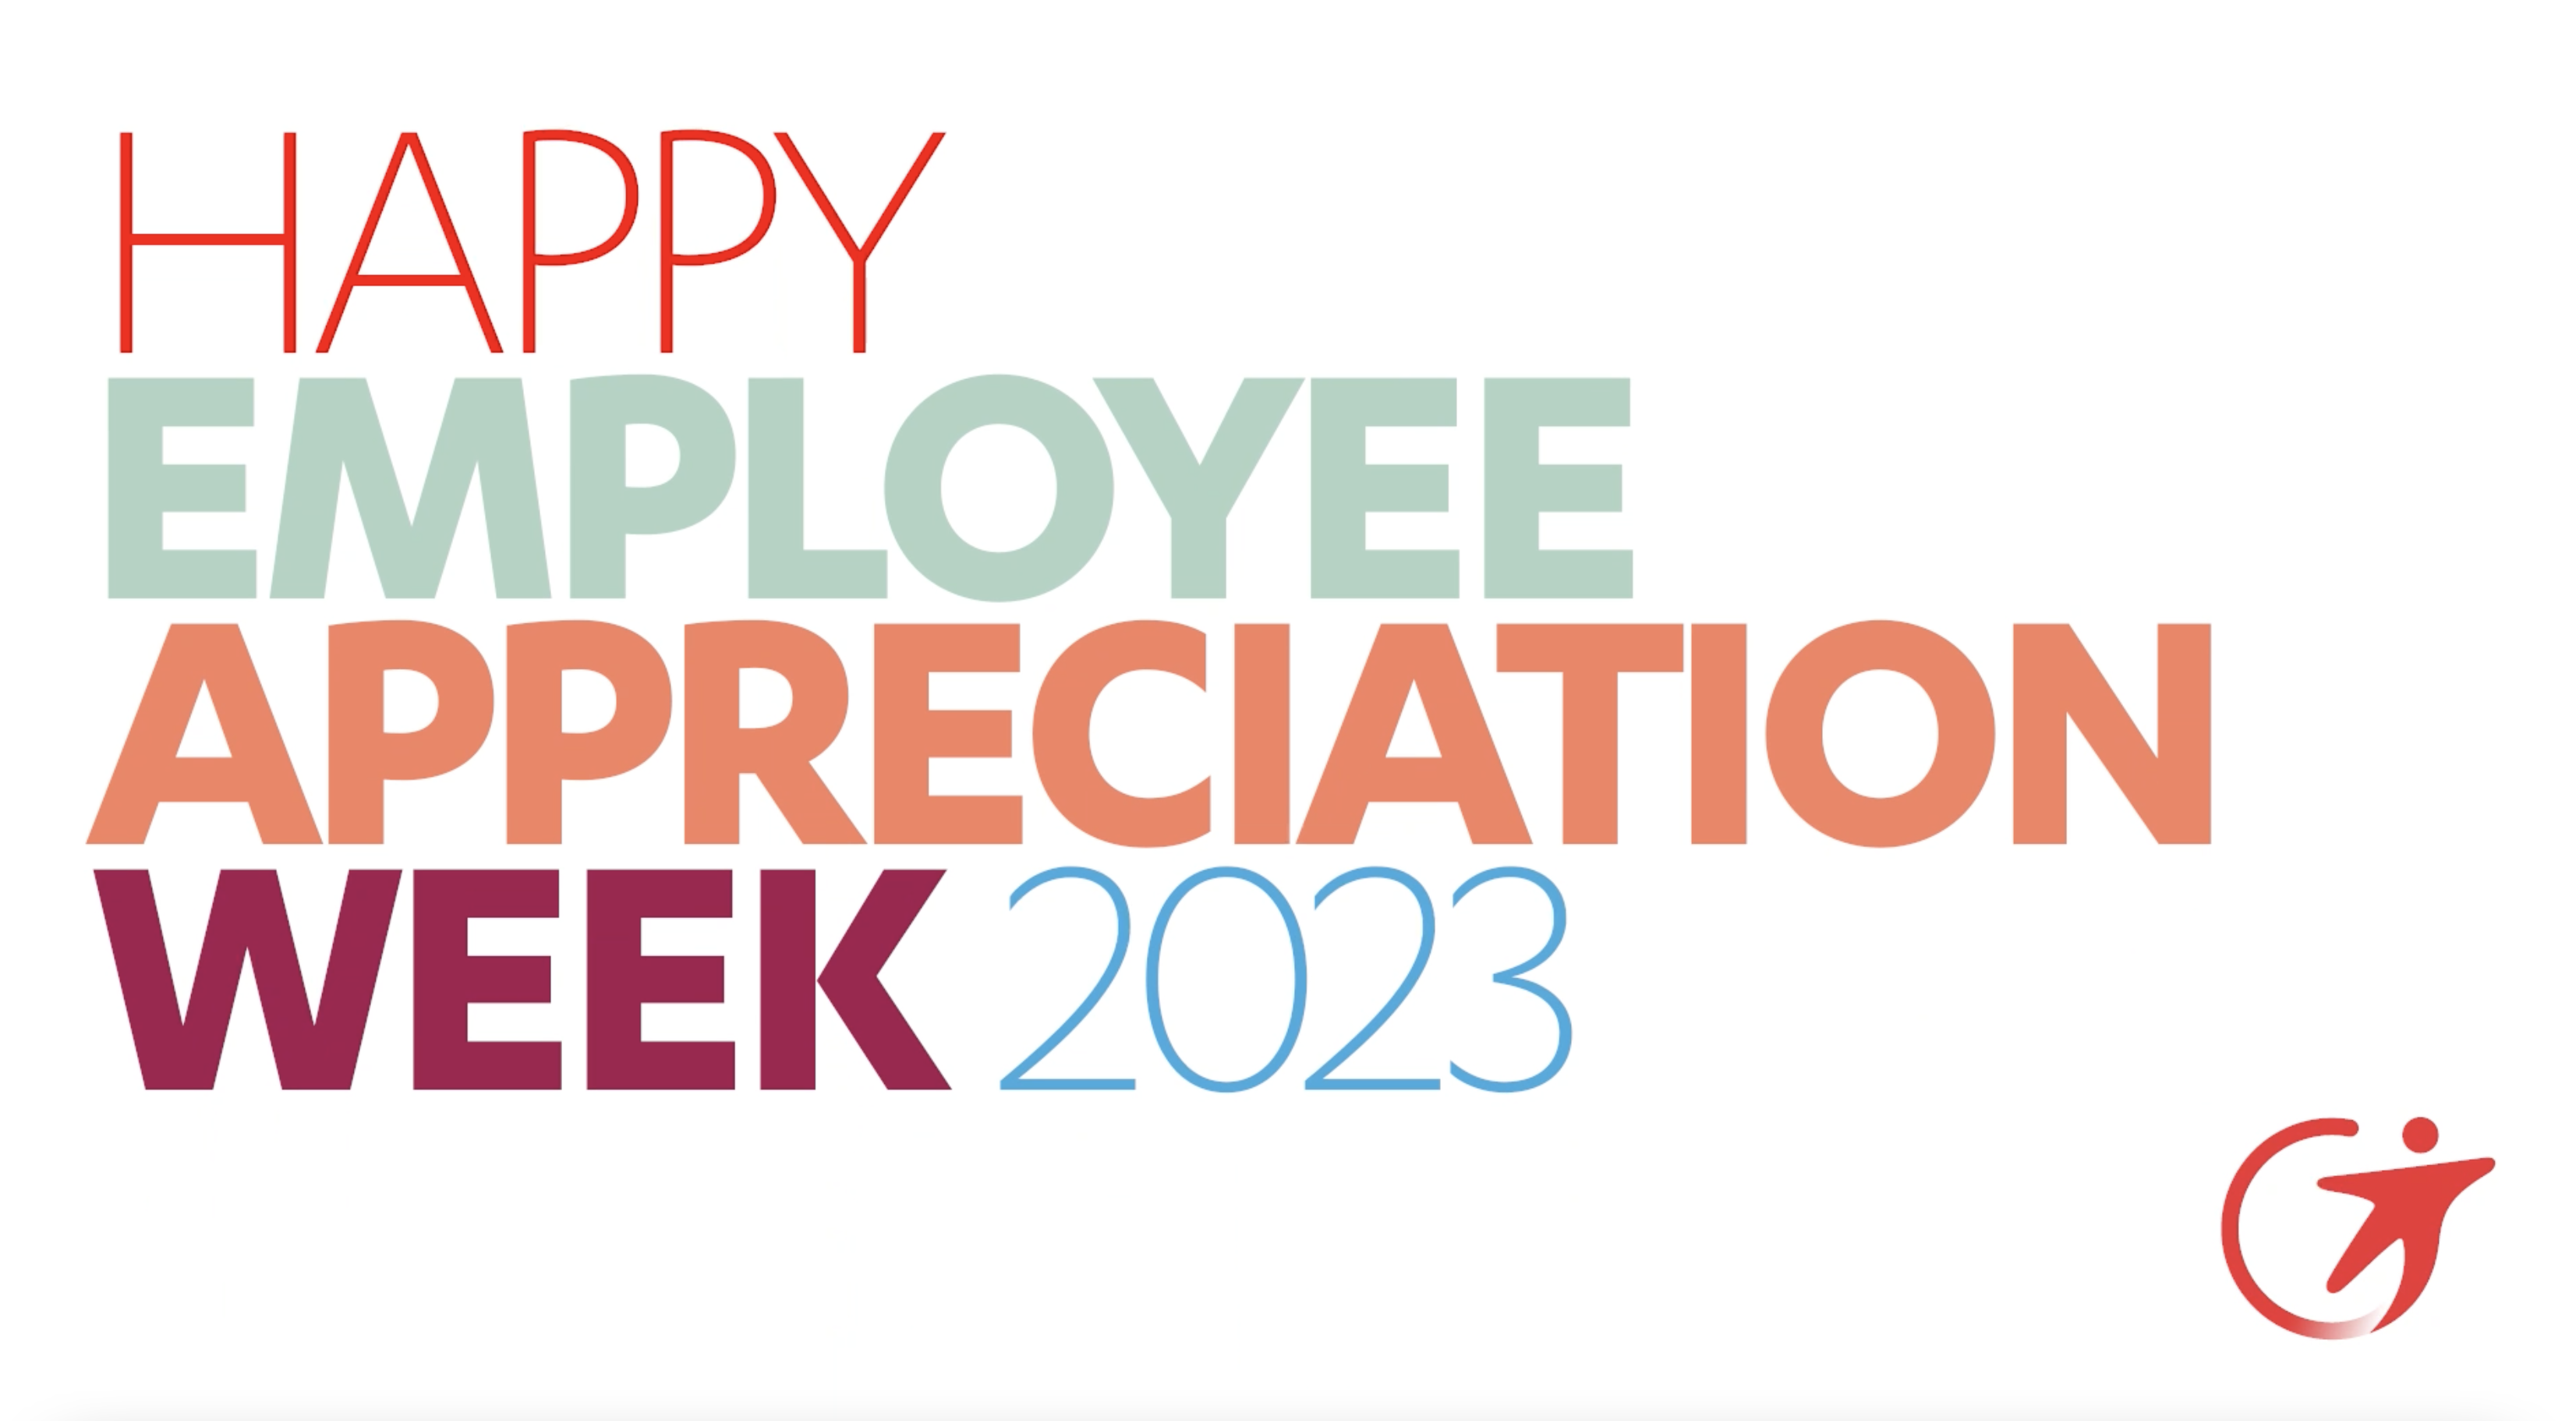 It's a Wrap: Employee Appreciation Week Recap Video Ready to Share